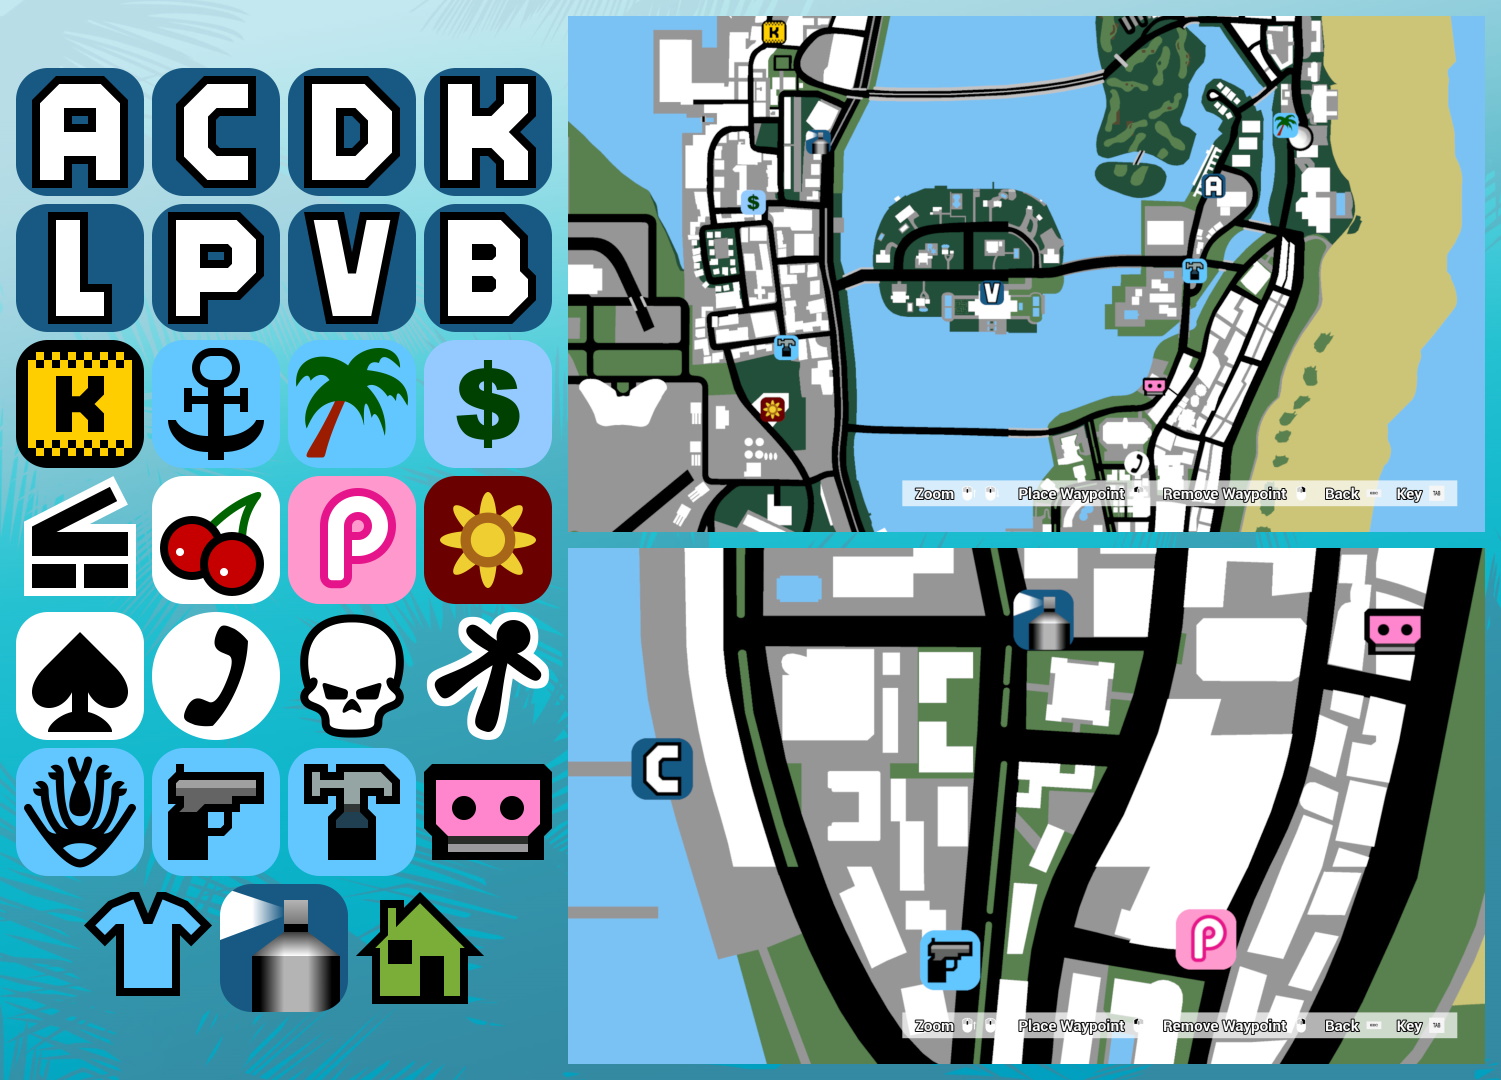 Grand Theft Auto Vice City Map : r/nostalgia